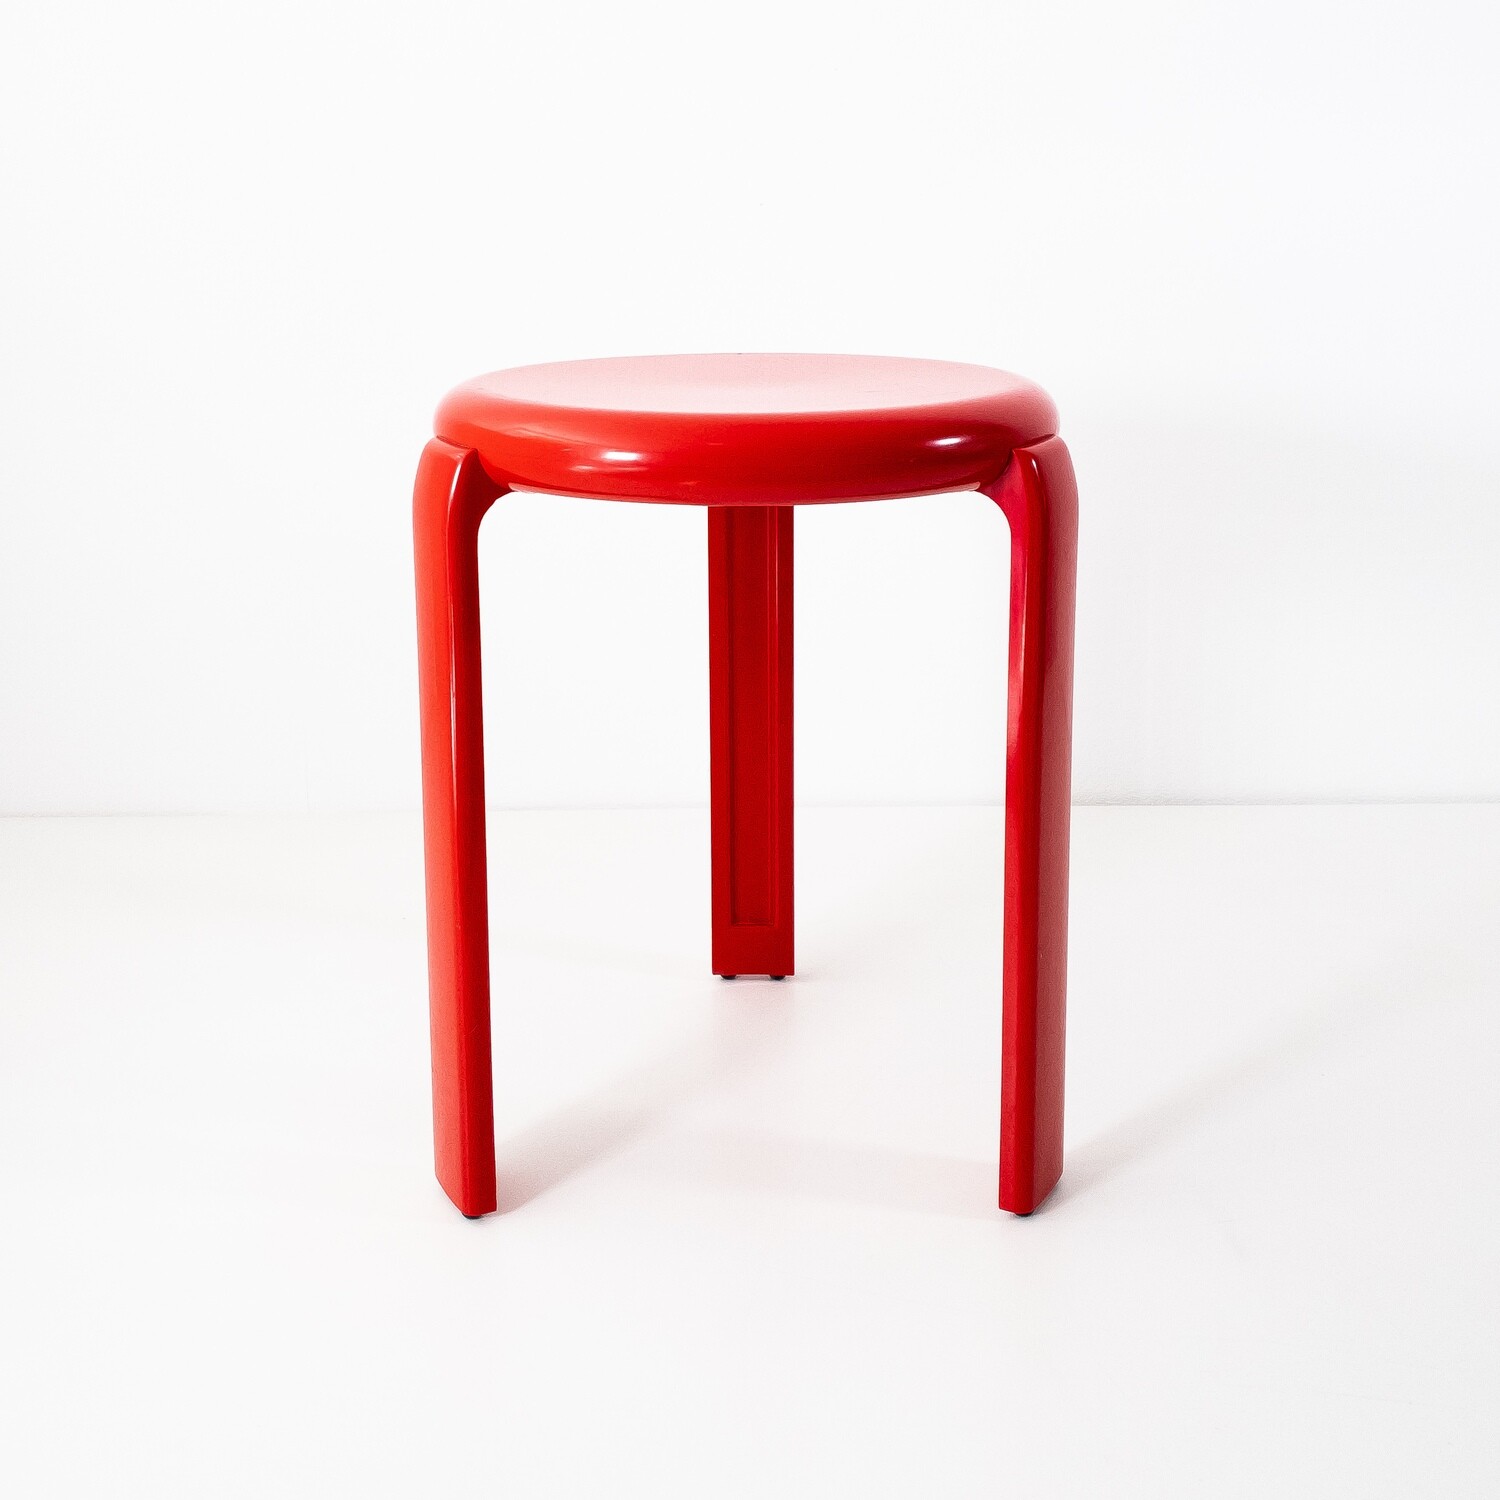 Red stool by Metalplastica